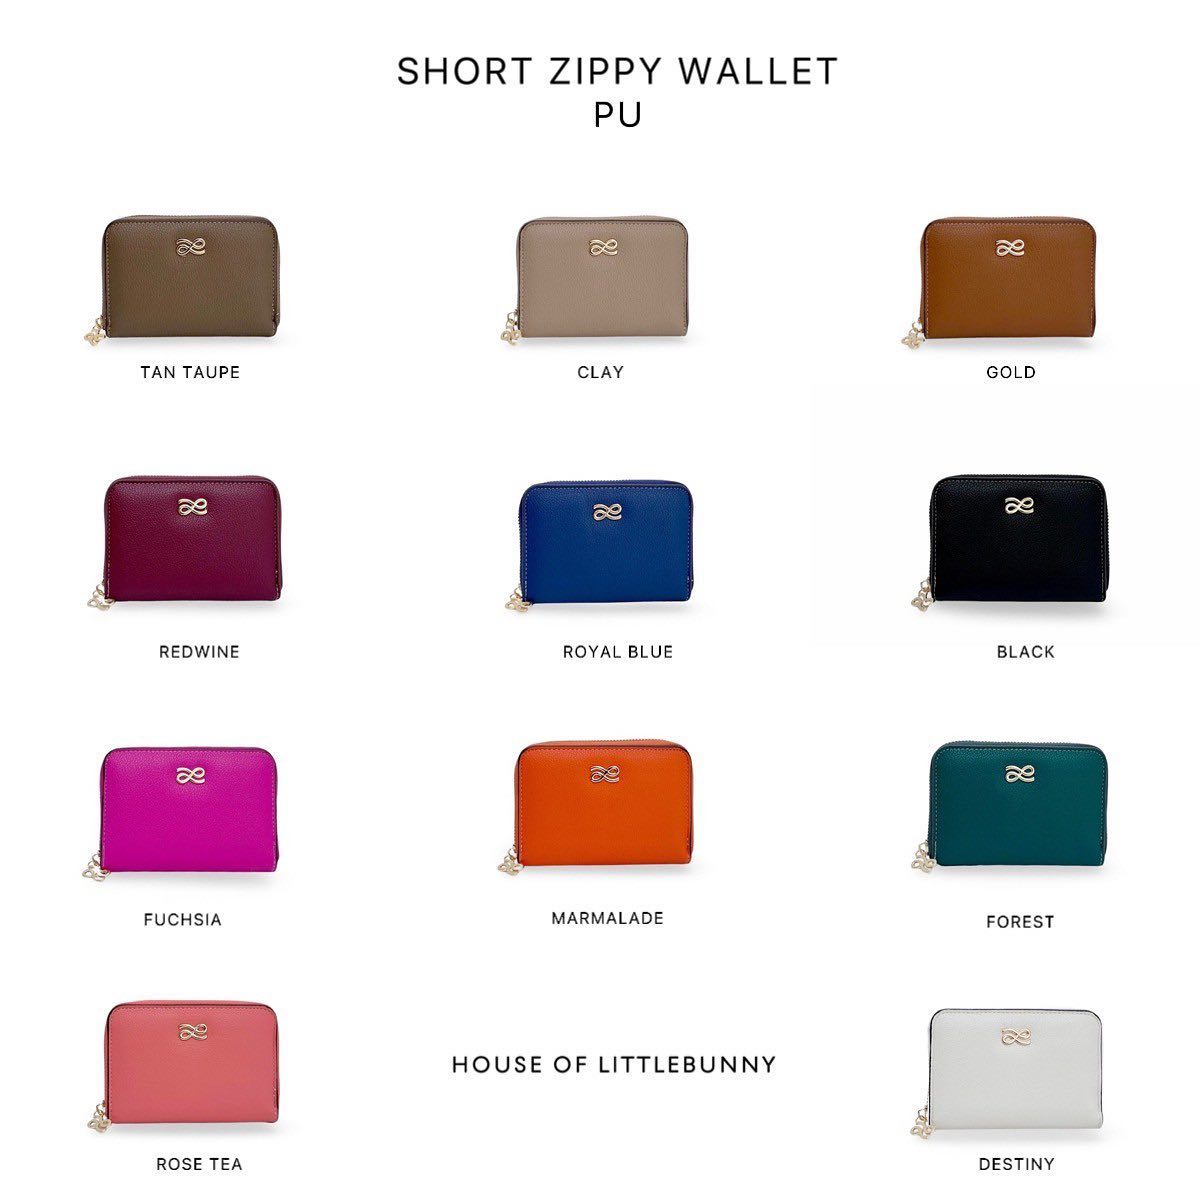 HOLB - Short Zippy Wallet PU Black